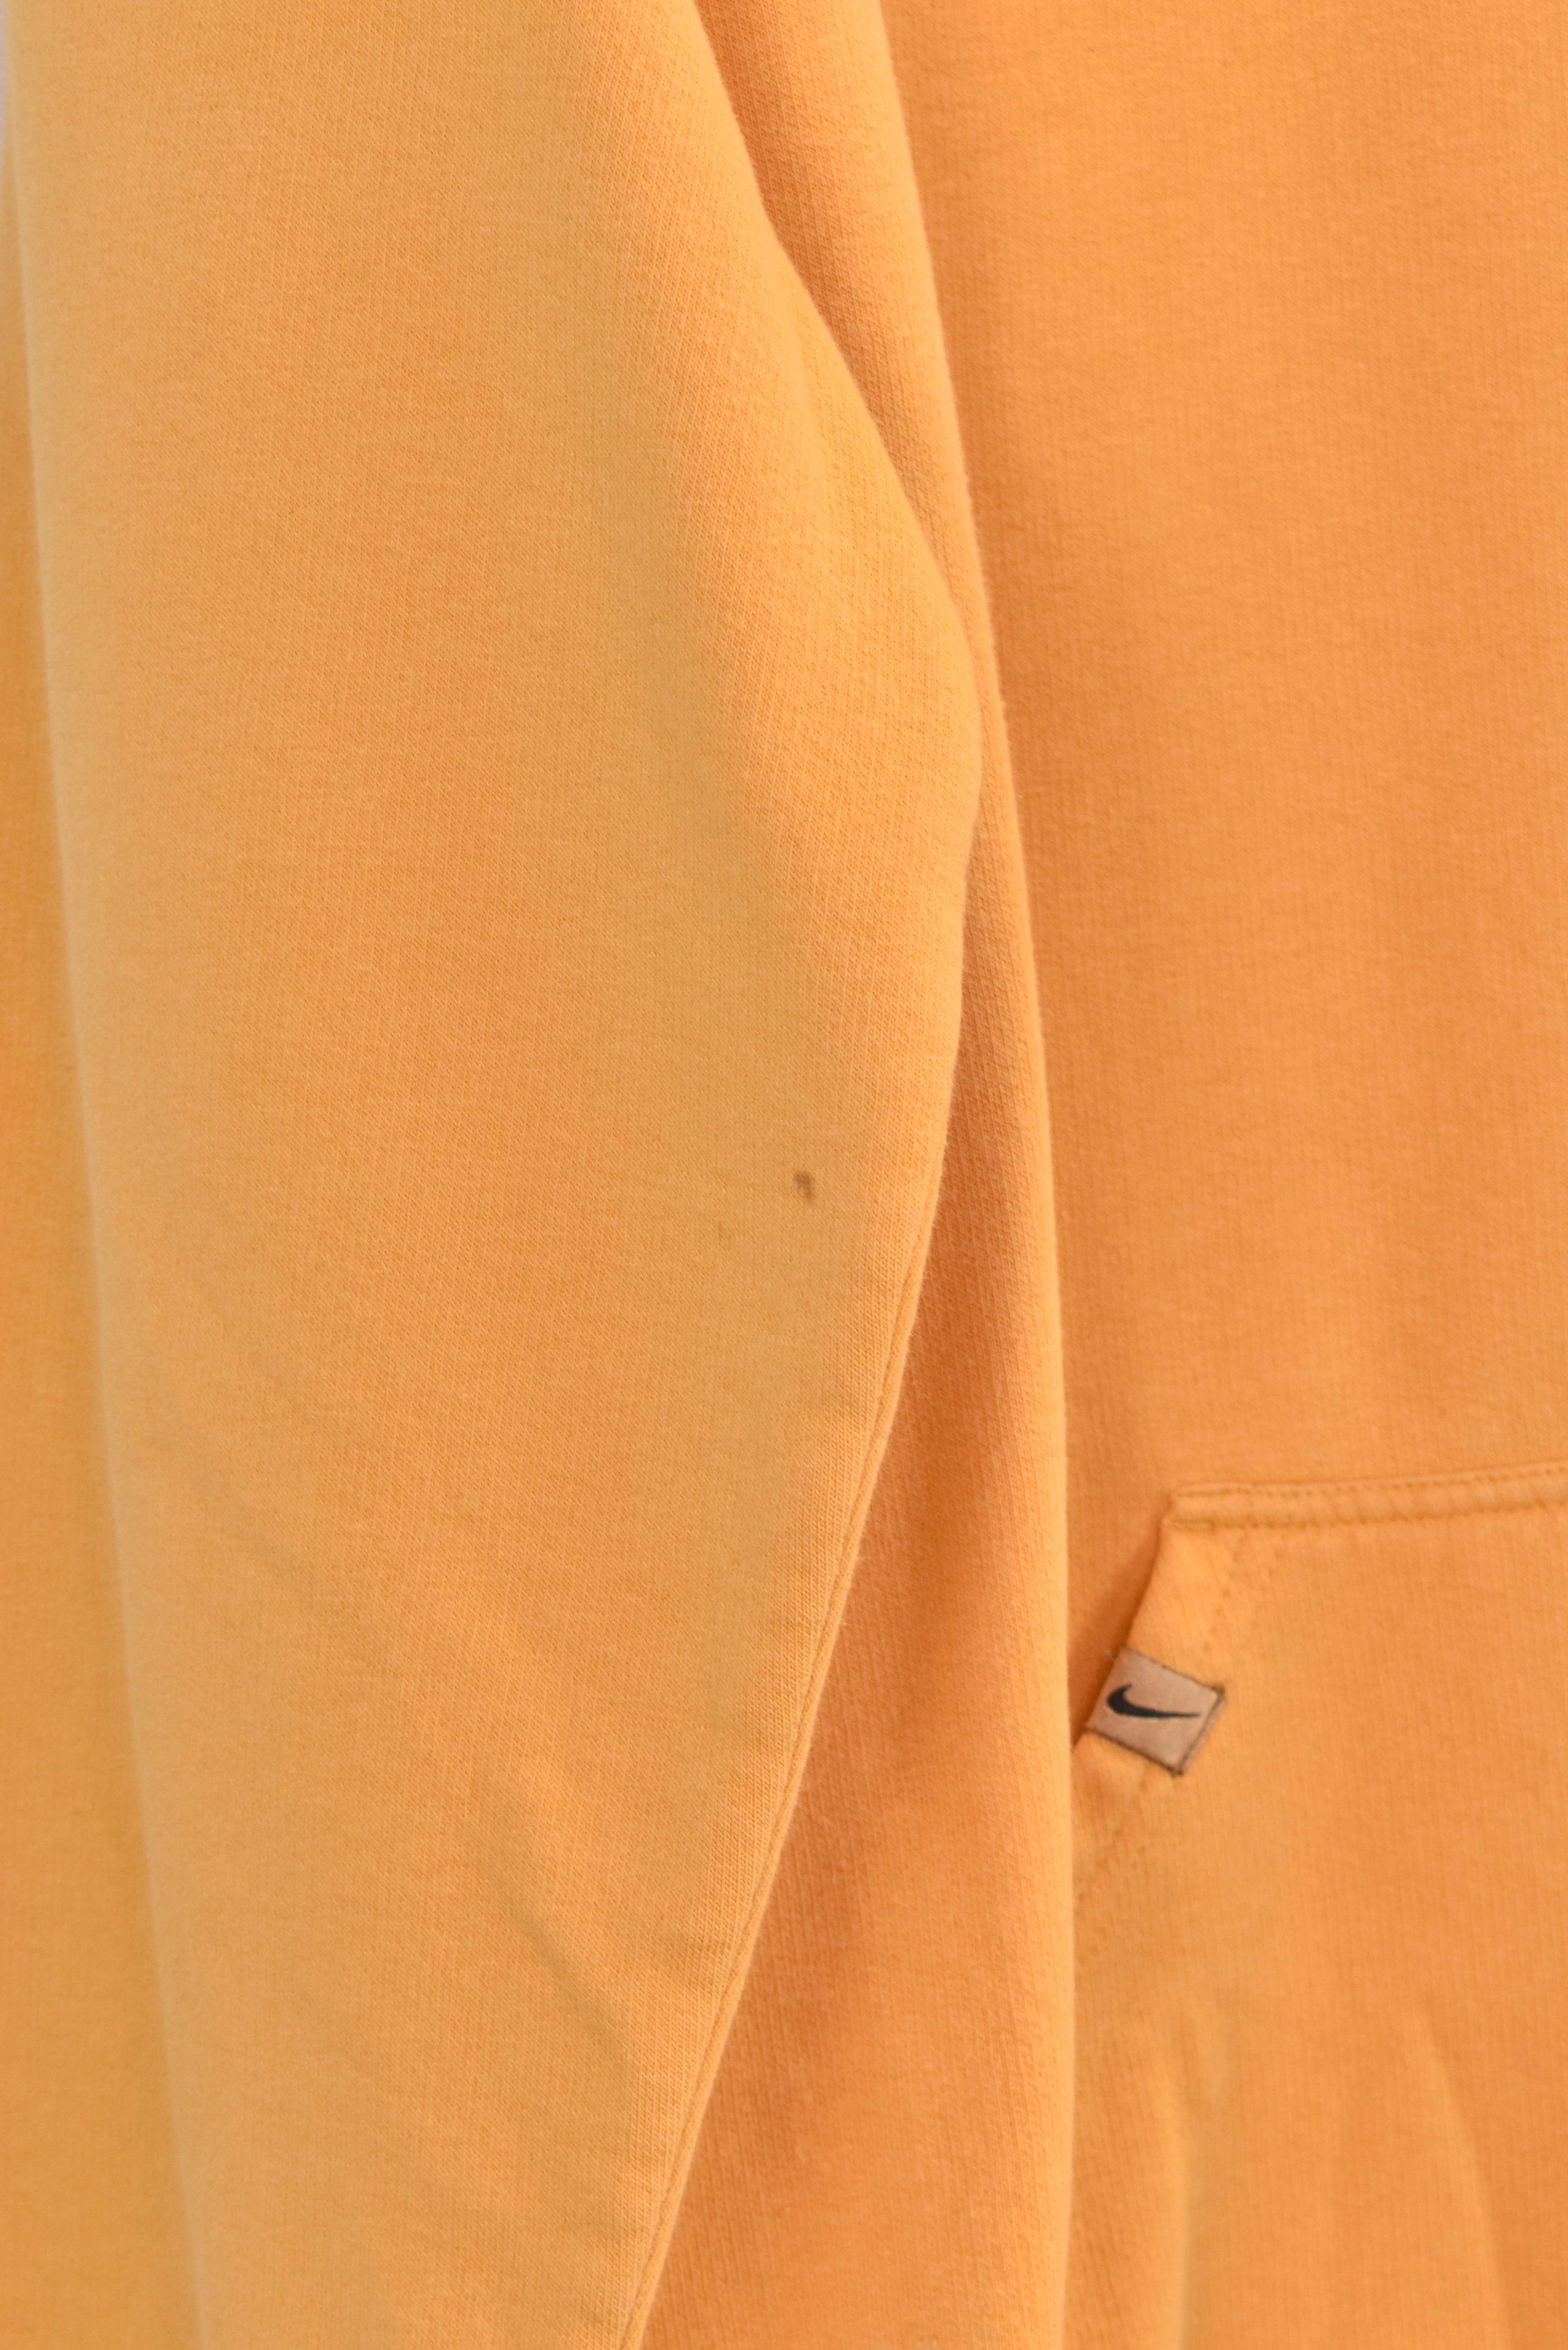 Vintage Nike hoodie (XL), yellow embroidered sweatshirt